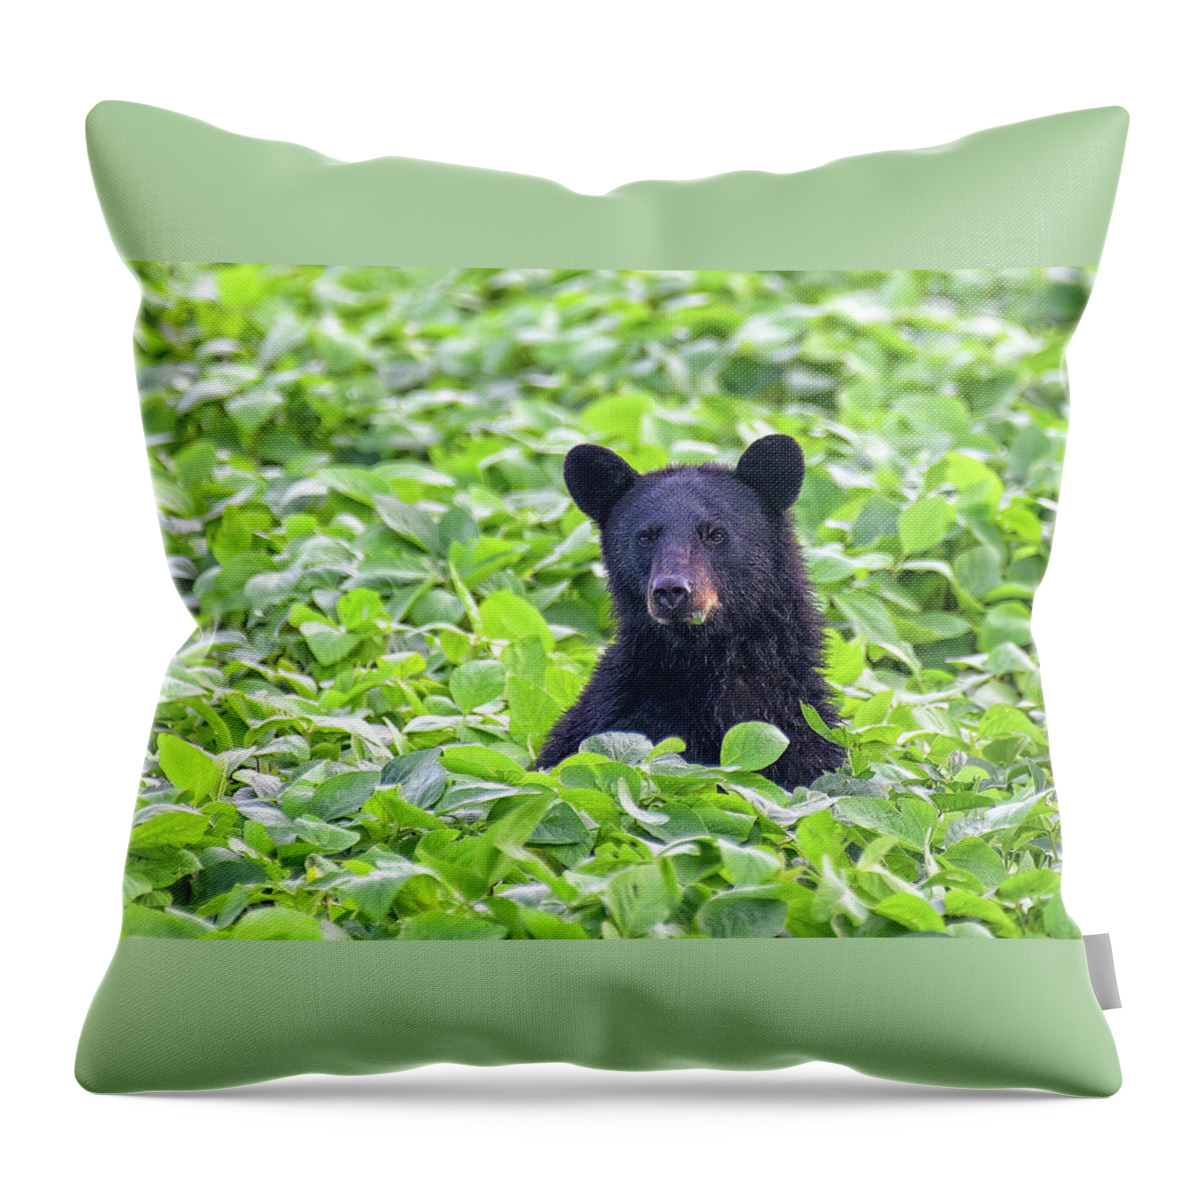 Black Bear Throw Pillow featuring the photograph Black Bear Bean Breakfast by Fon Denton